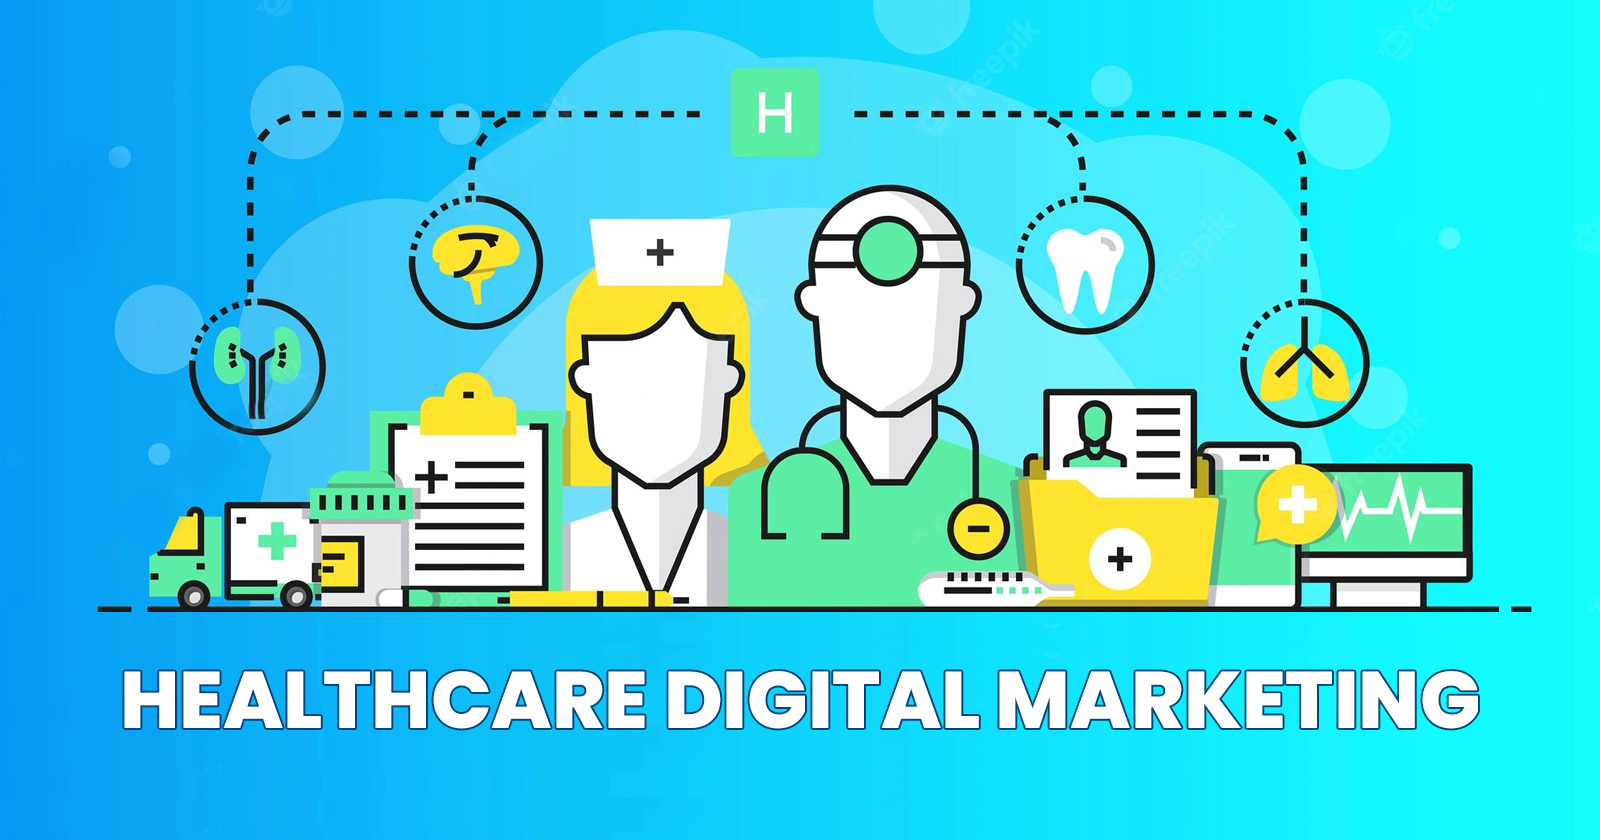 Healthcare Digital Marketing - Importance & Best Practices